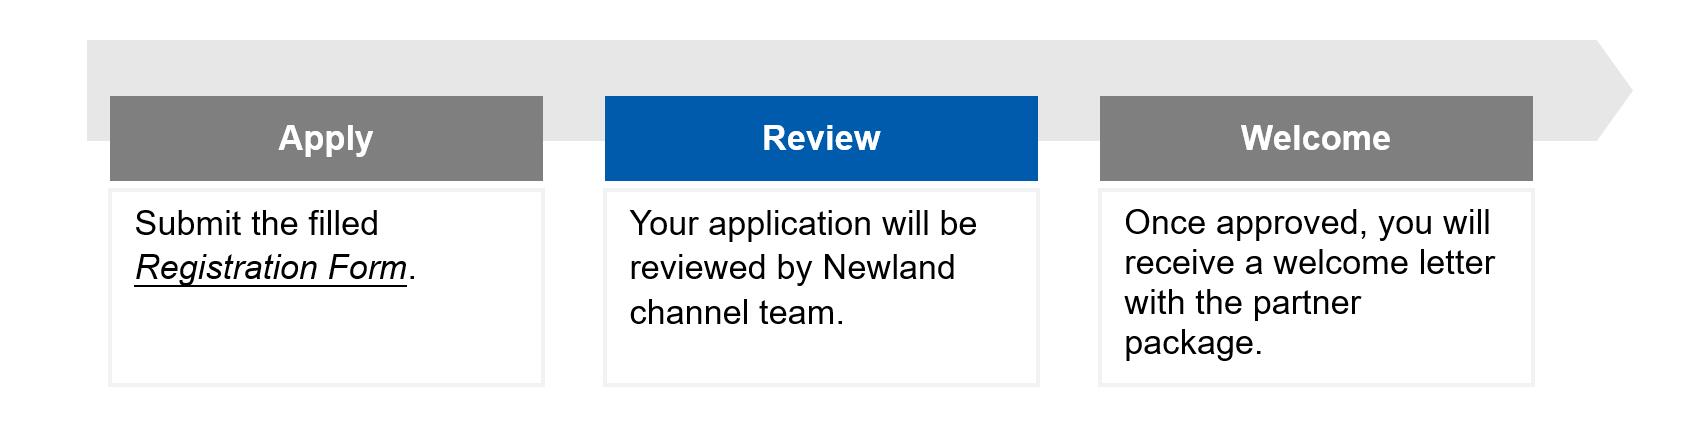 20200324 Newland Parter Program Application.jpg